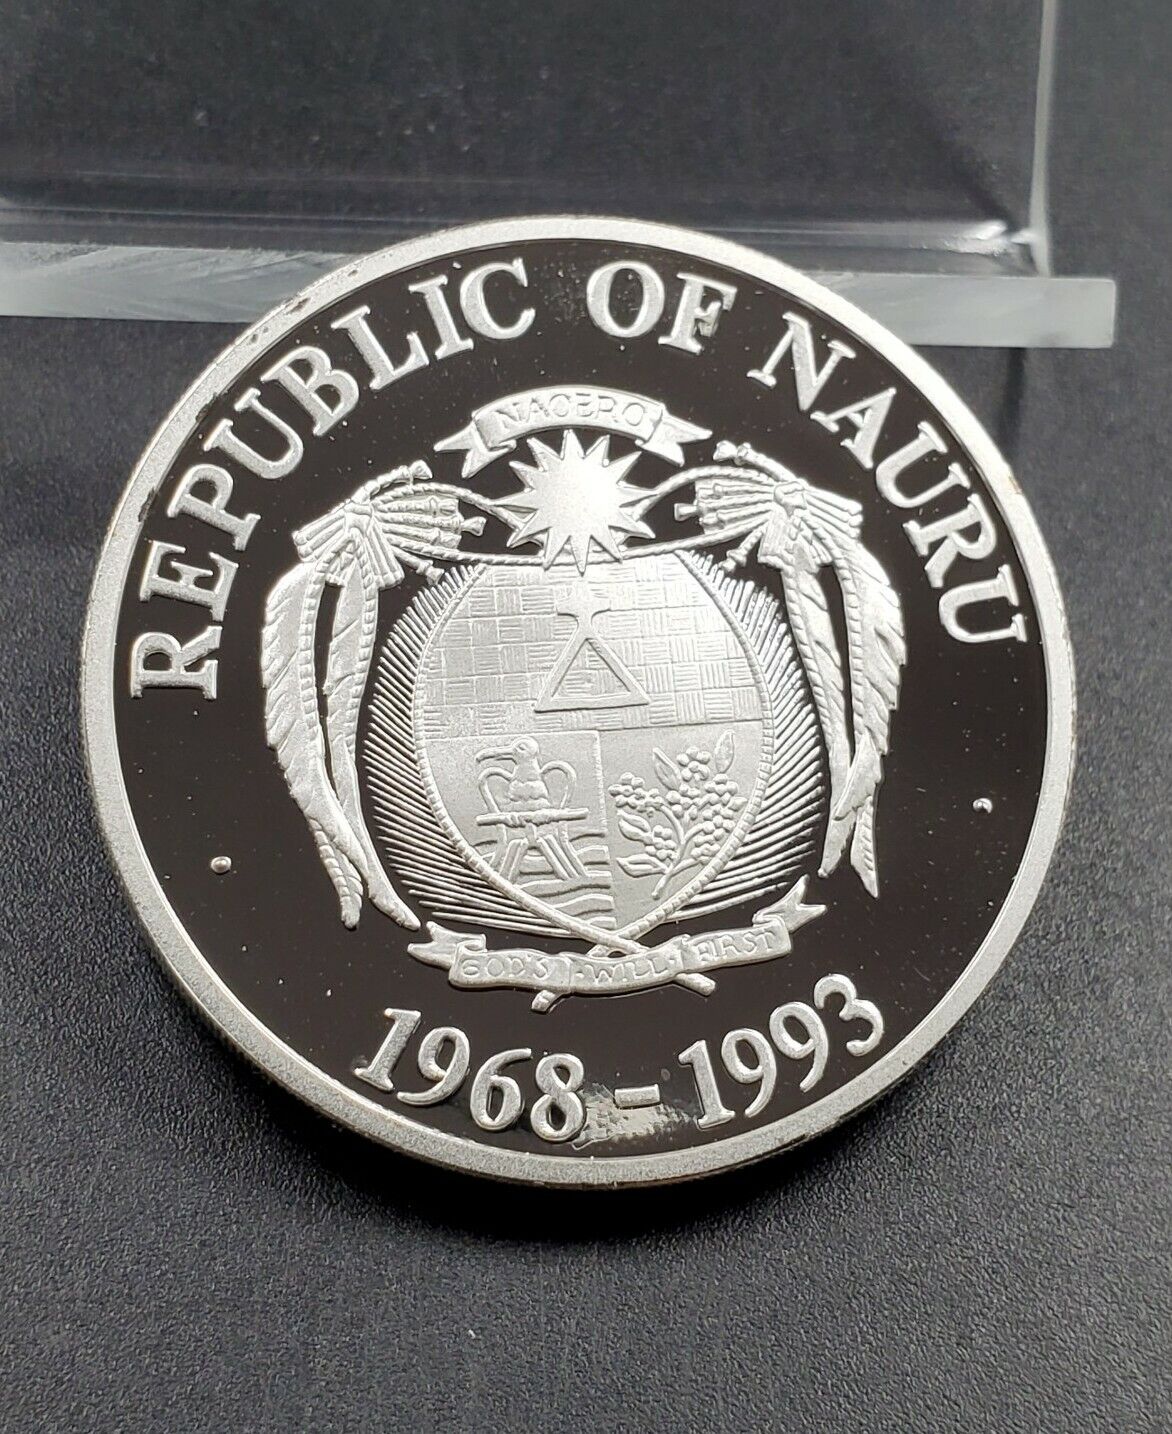 1993 Nauru Republic 10 Dollars Independence Map KM-1 Gem silver proof 1k Mintage